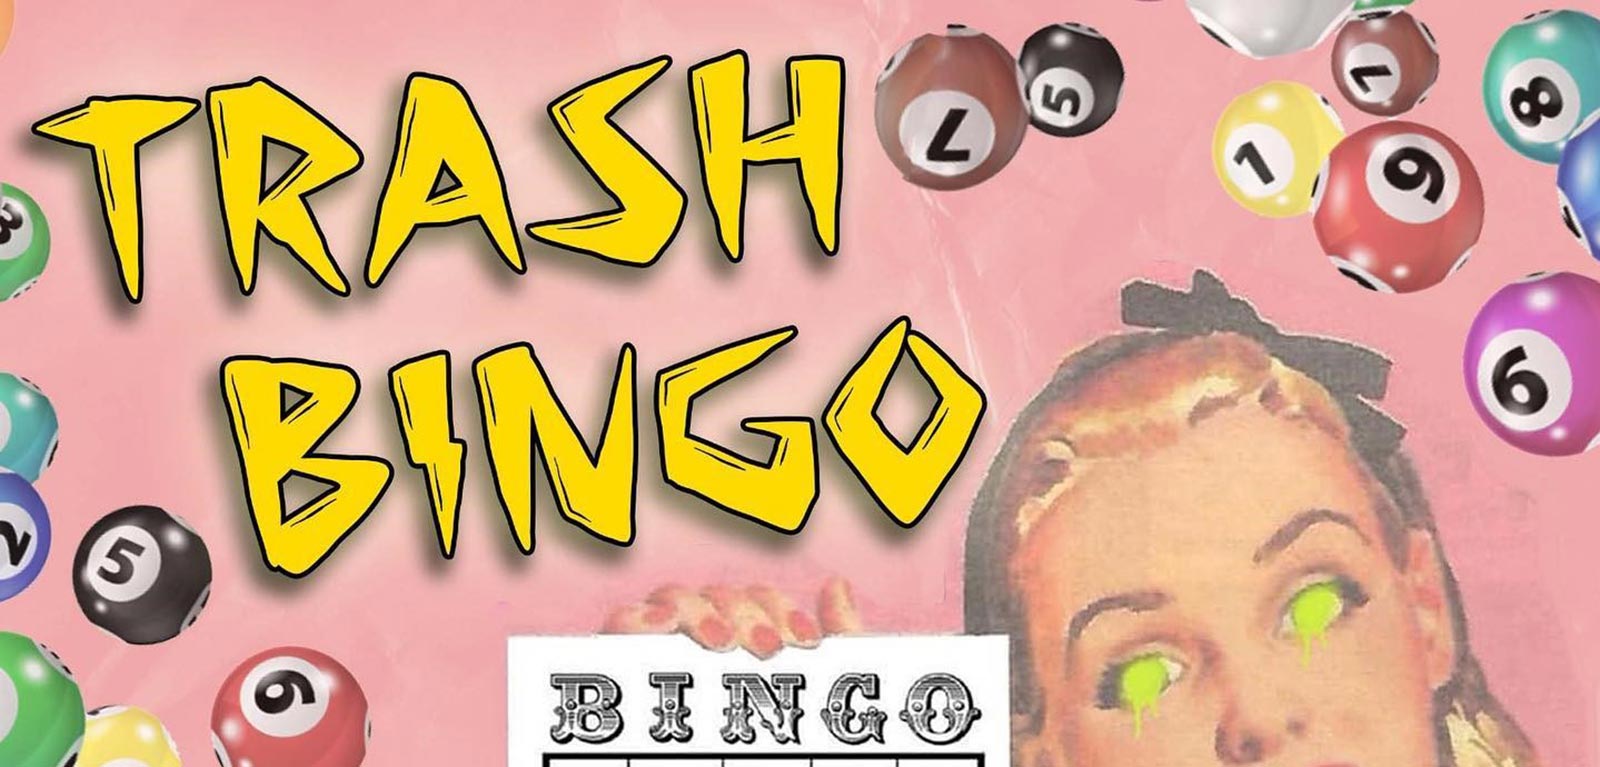 Trash bingo poster